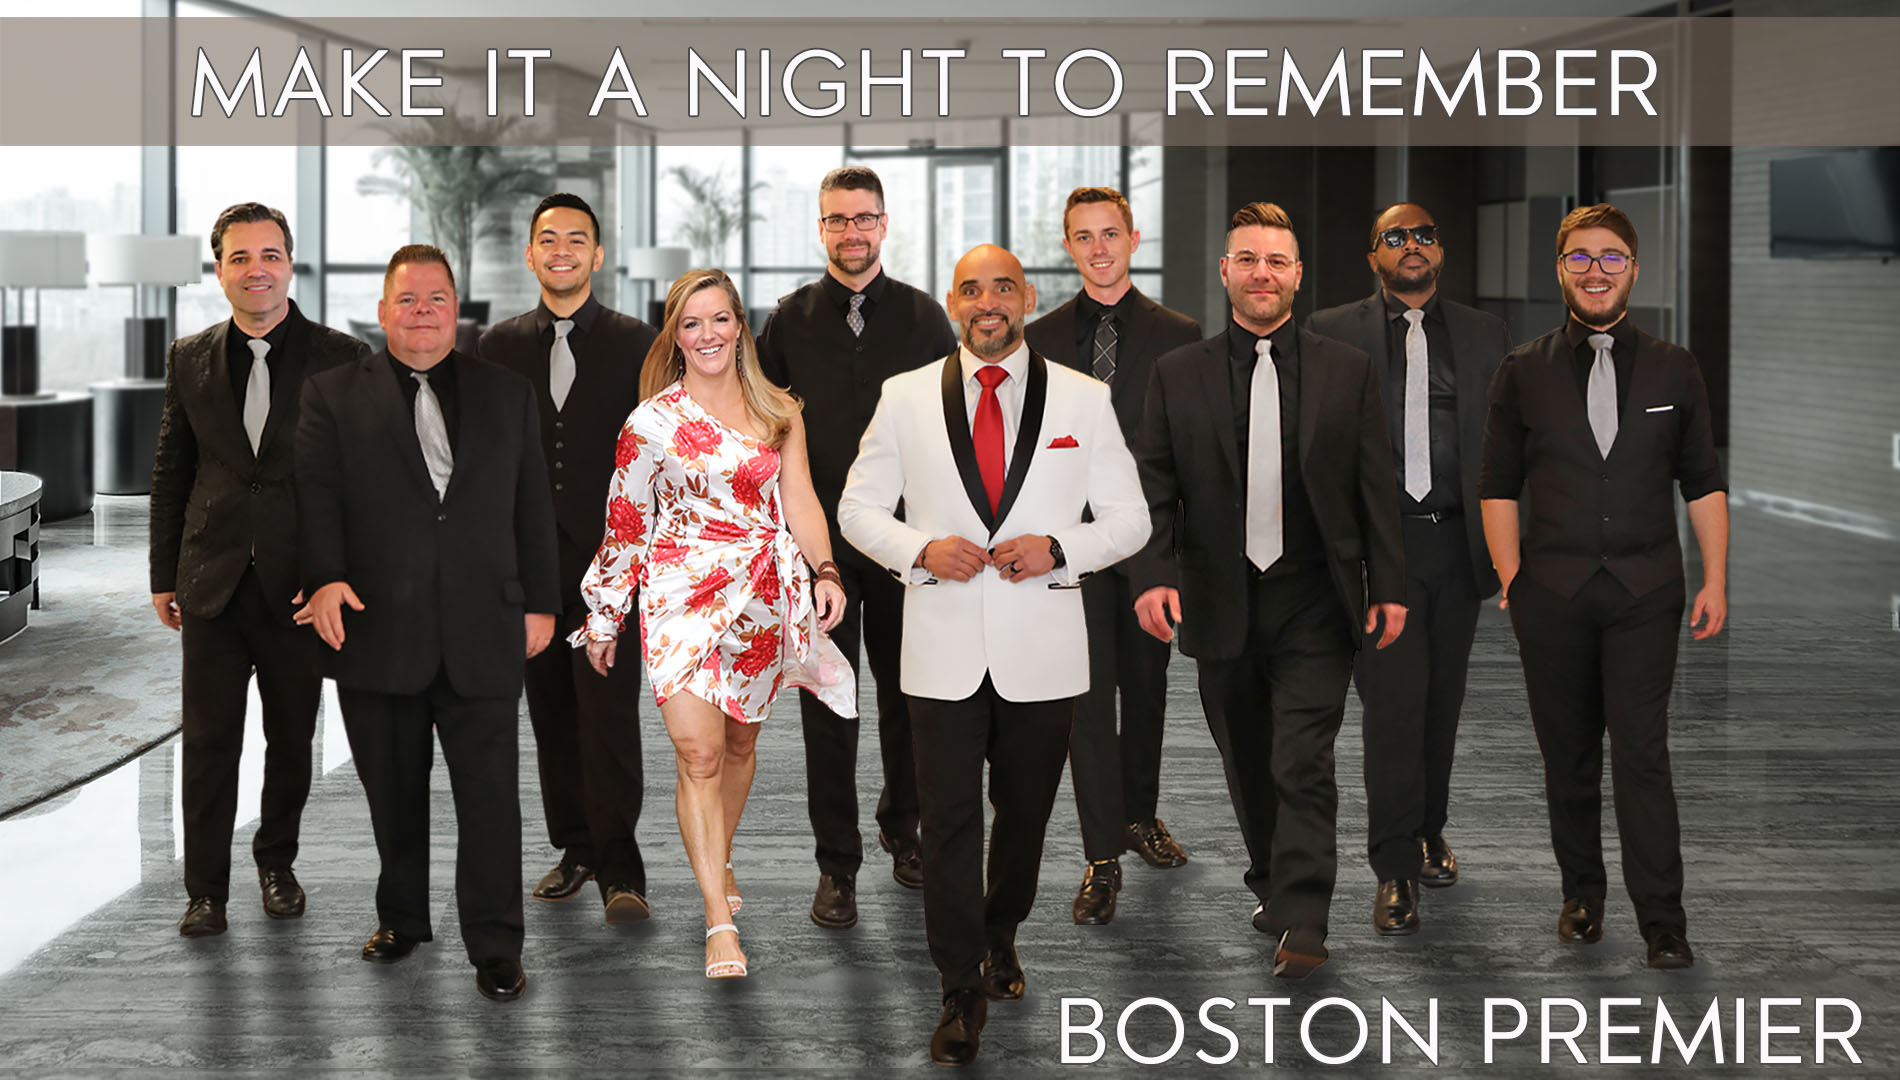 Boston Premier band posing for a photo at a Boston Hotel.